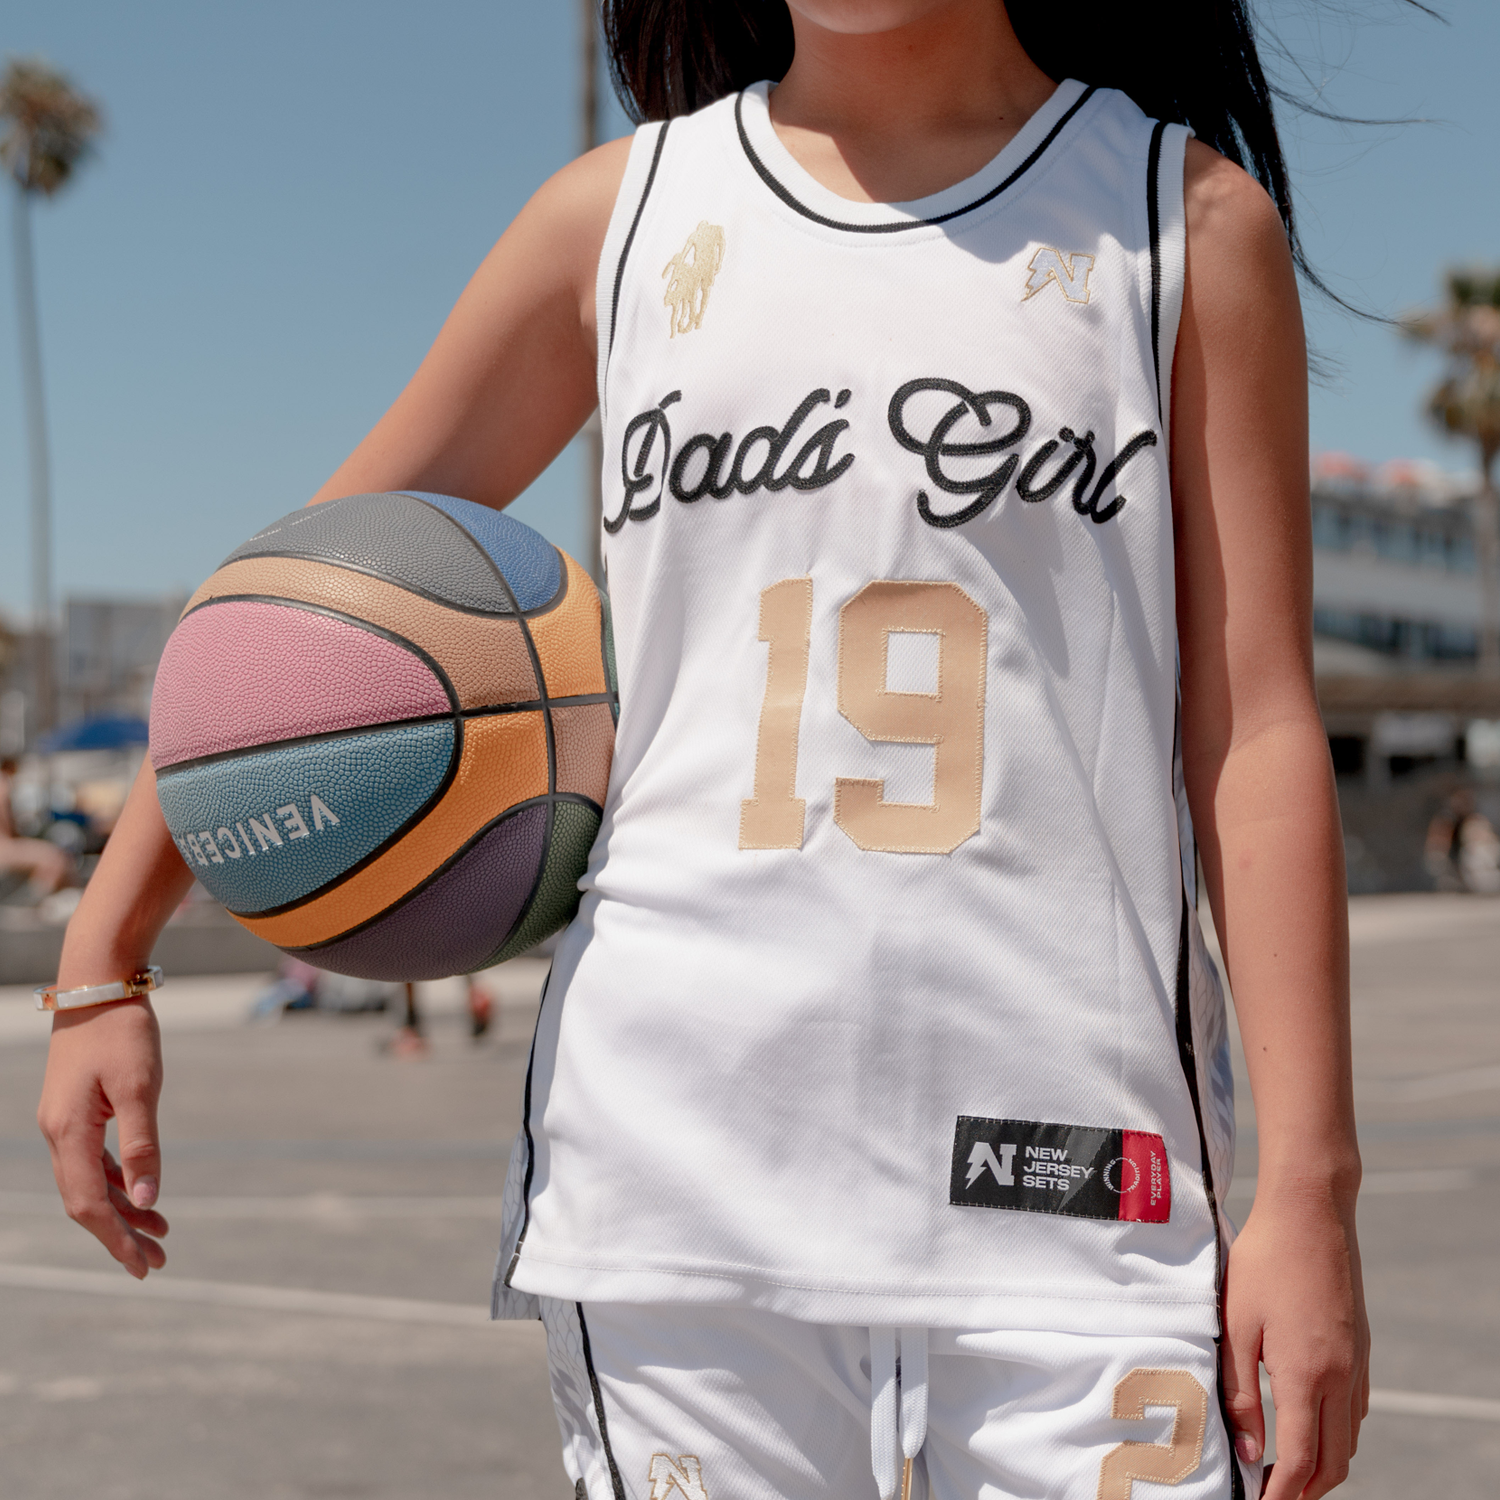 Customizable "Dad's Girl" Womens Basketball Jersey - White